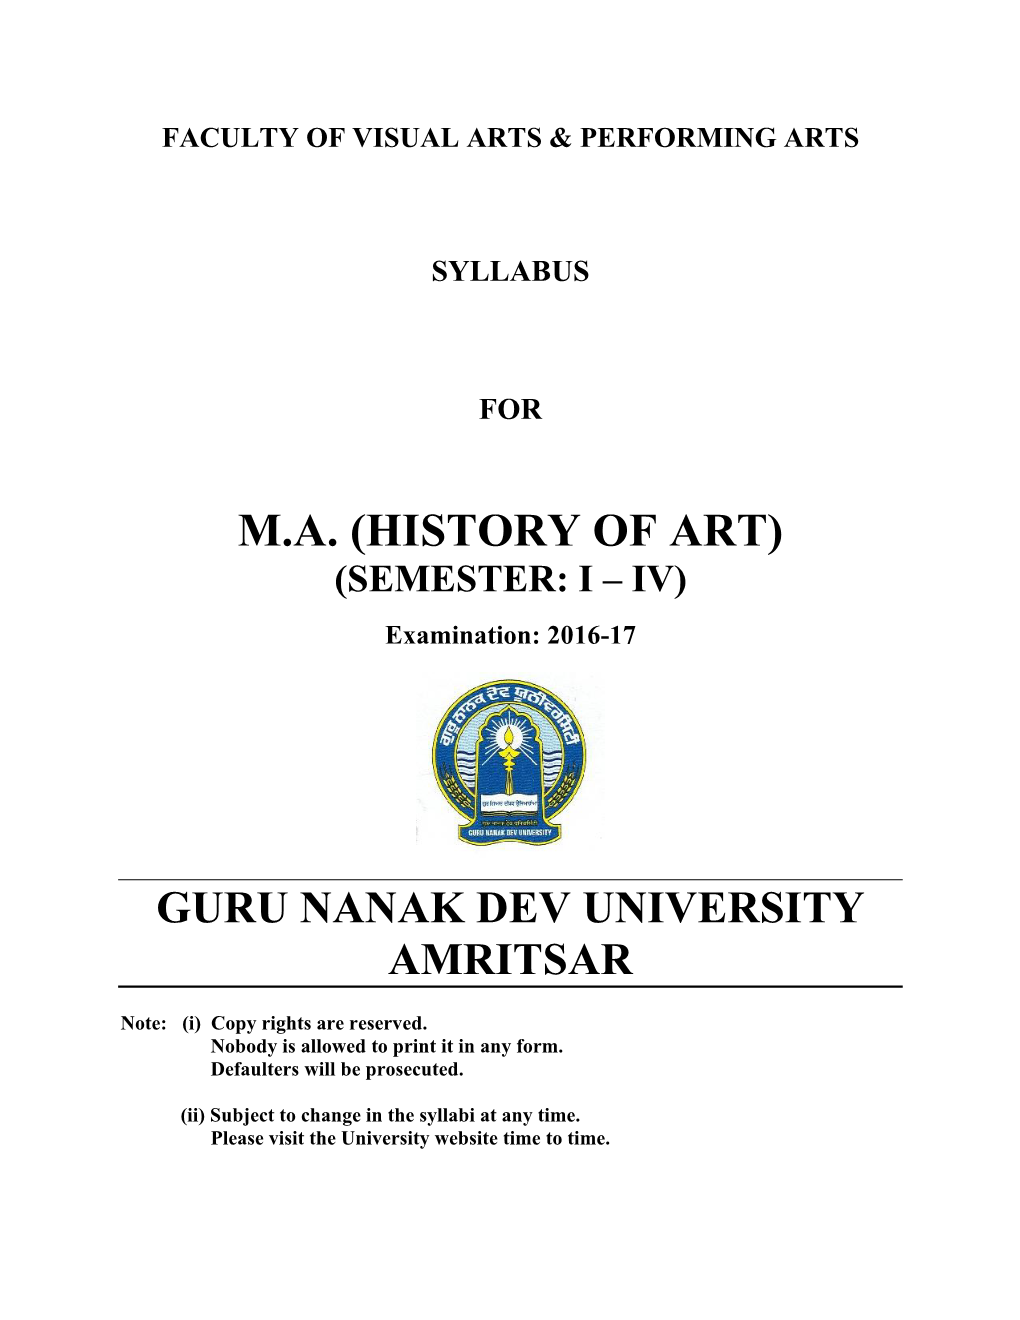 M.A. (HISTORY of ART) (SEMESTER: I – IV) Examination: 2016-17